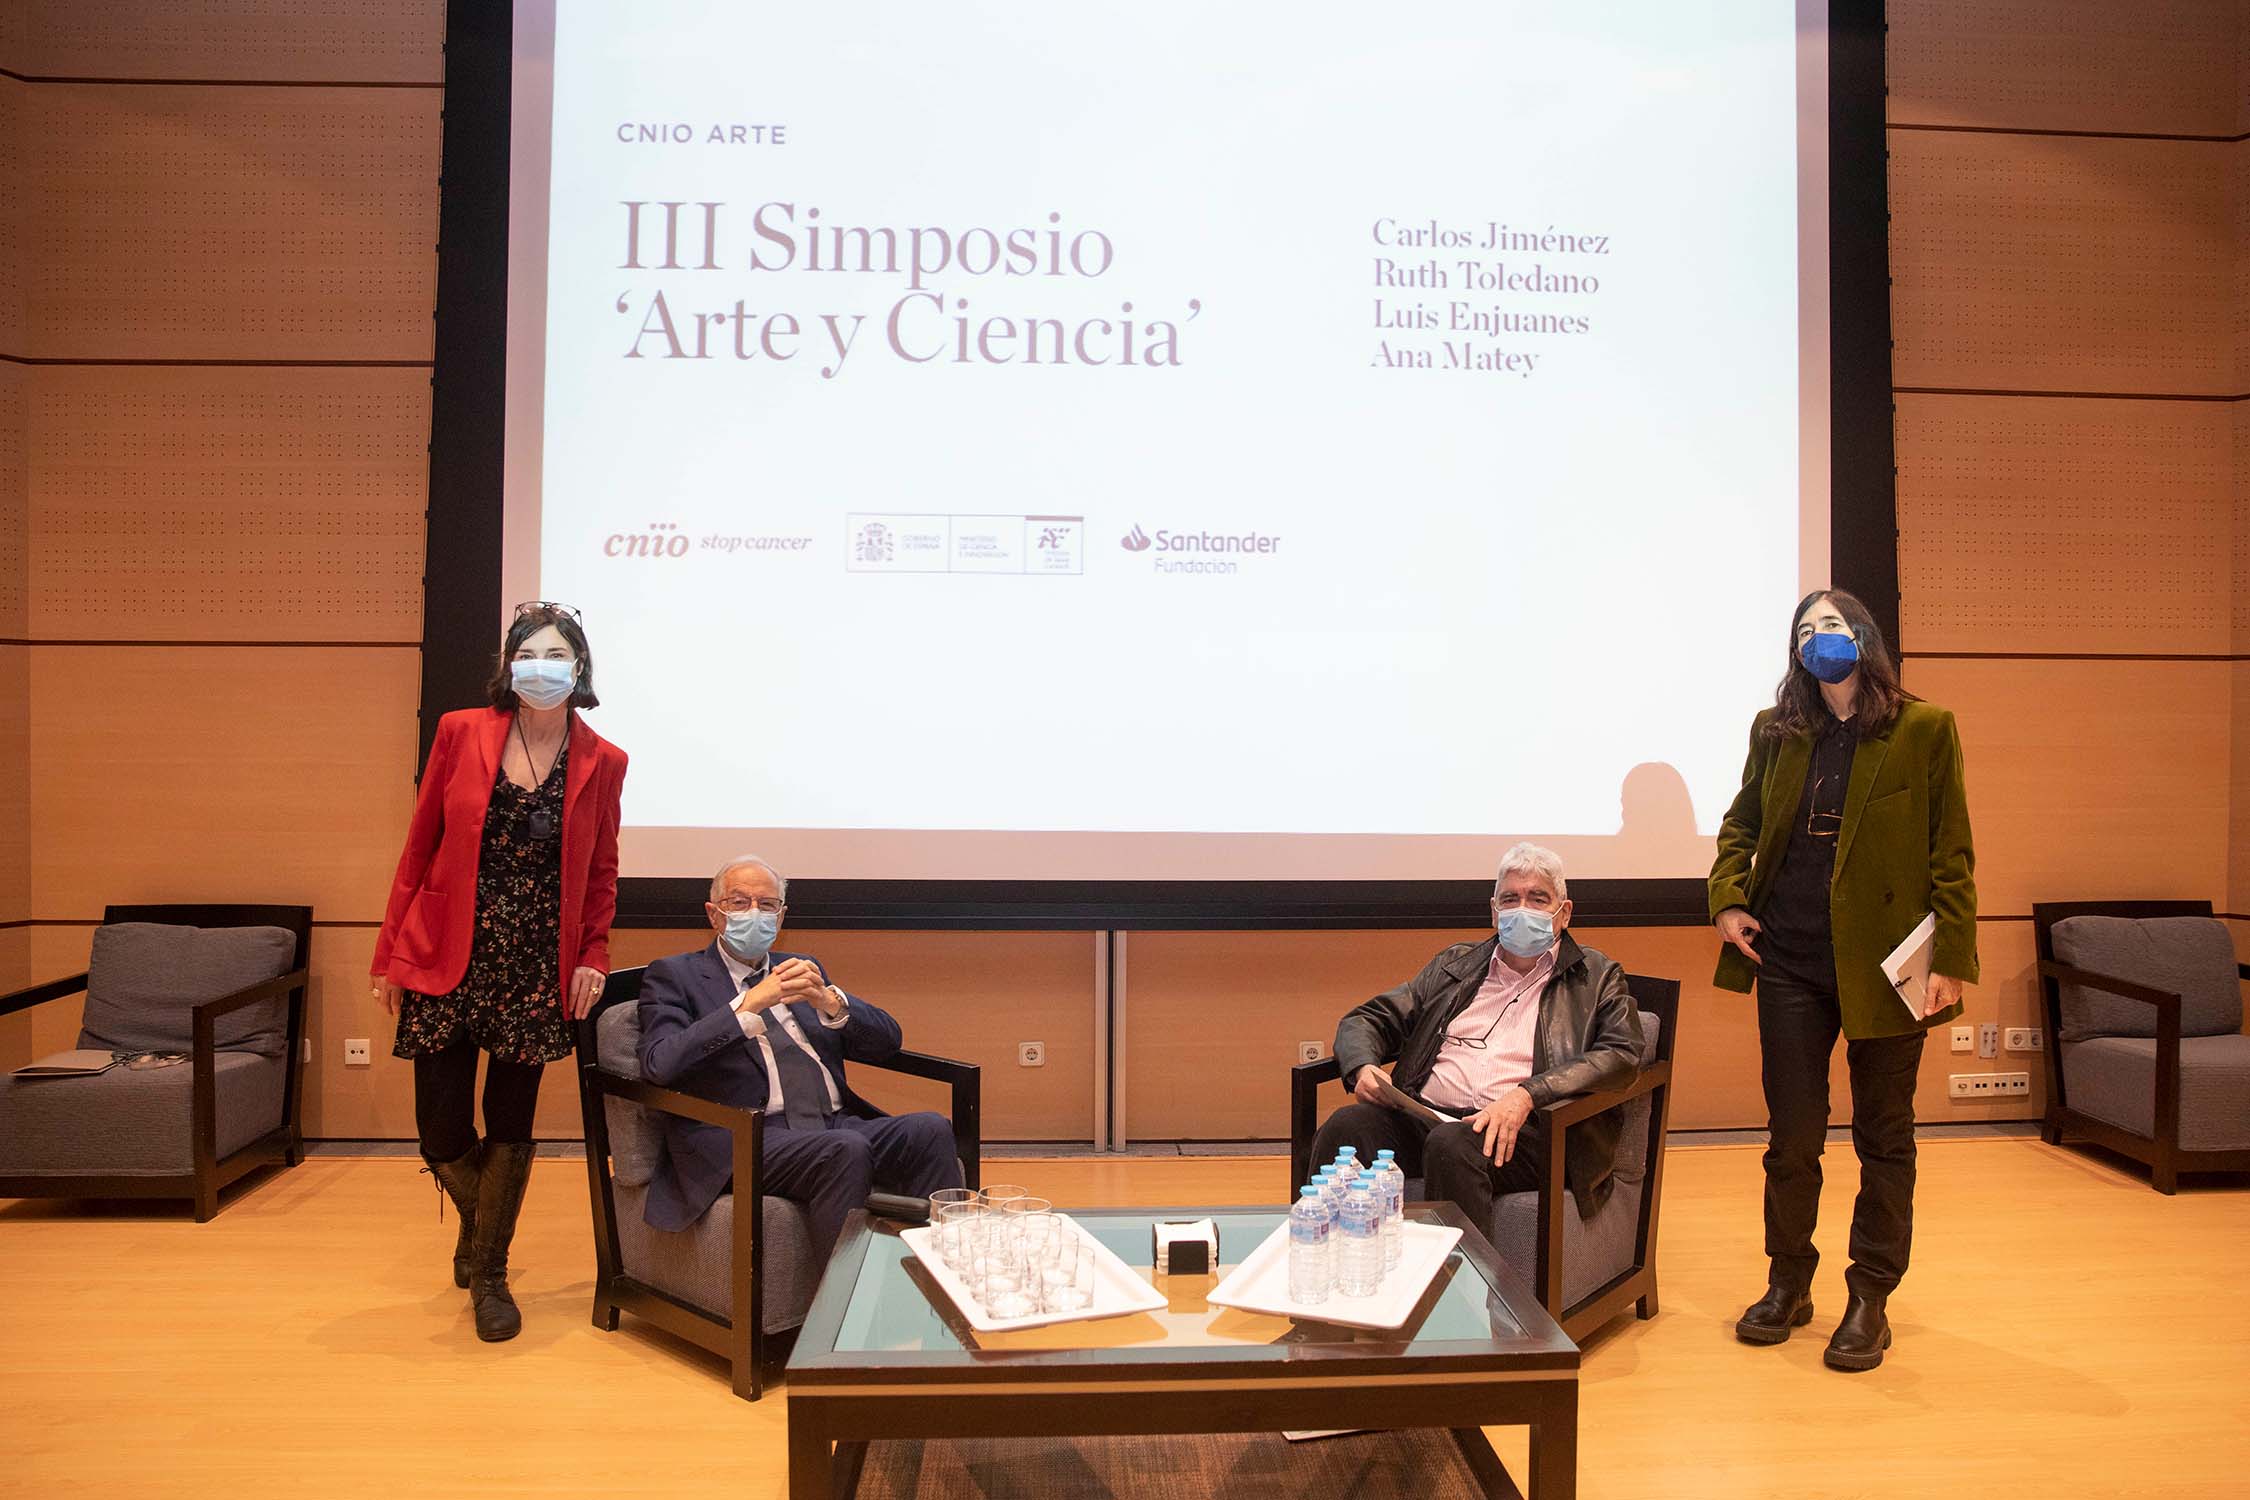 From left to right, CNIO Art curator Amparo Garrido, scientist Luis Enjuanes, art critic Carlos Jimenez and CNIO director Maria A. Blasco.  /<strong>Laura M. Lombardía. CNIO</strong>